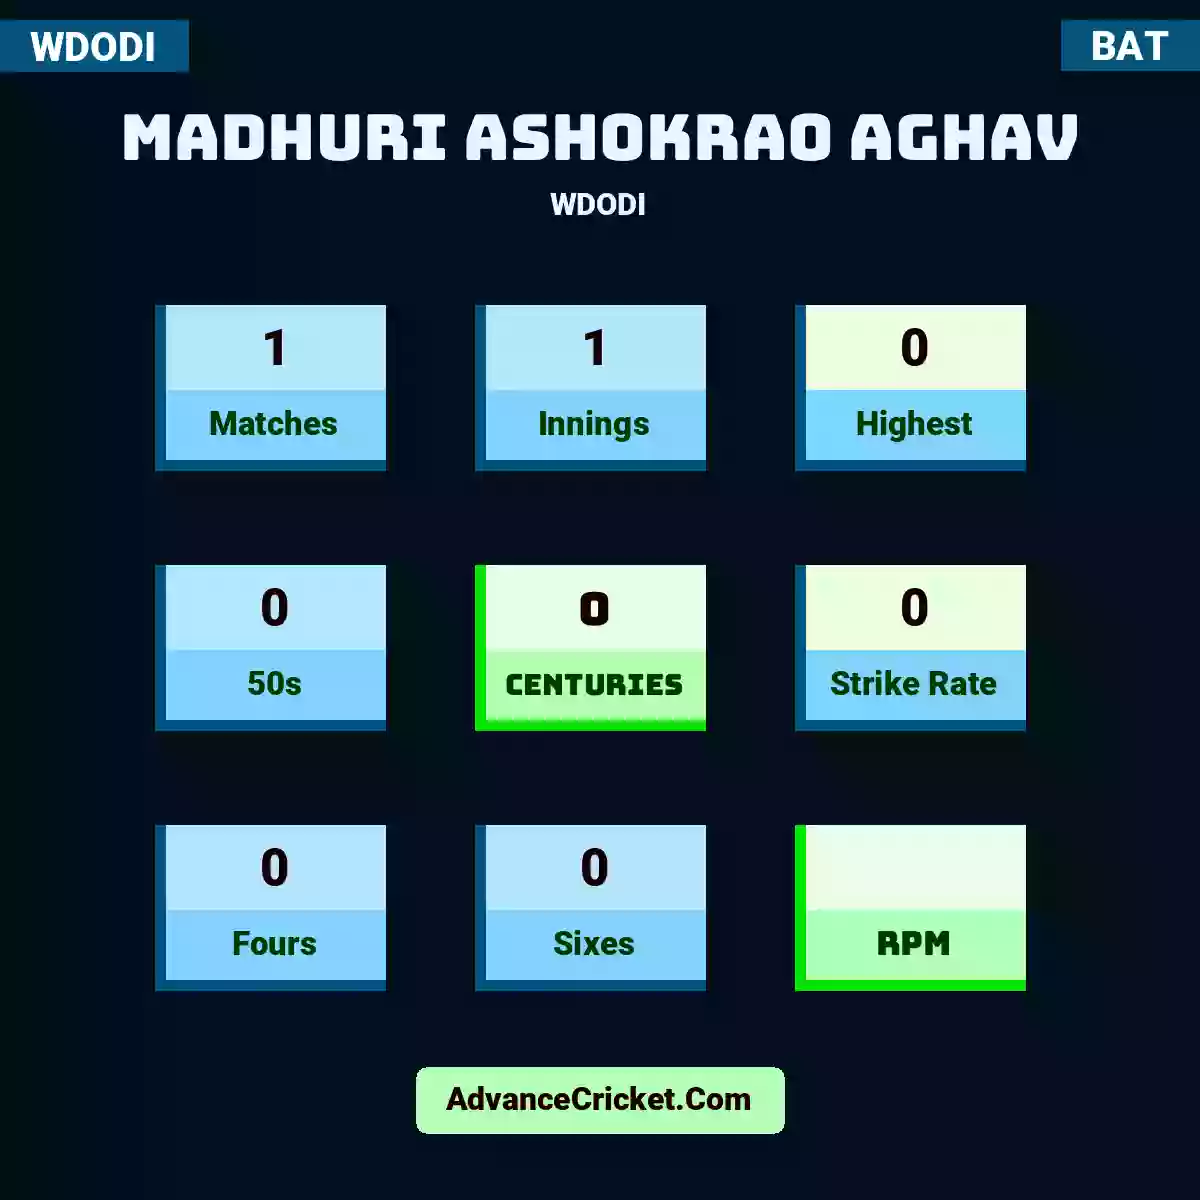 Madhuri Ashokrao Aghav WDODI , Madhuri Ashokrao Aghav played 1 matches, scored 0 runs as highest, 0 half-centuries, and 0 centuries, with a strike rate of 0. M.Ashokrao.Aghav hit 0 fours and 0 sixes.